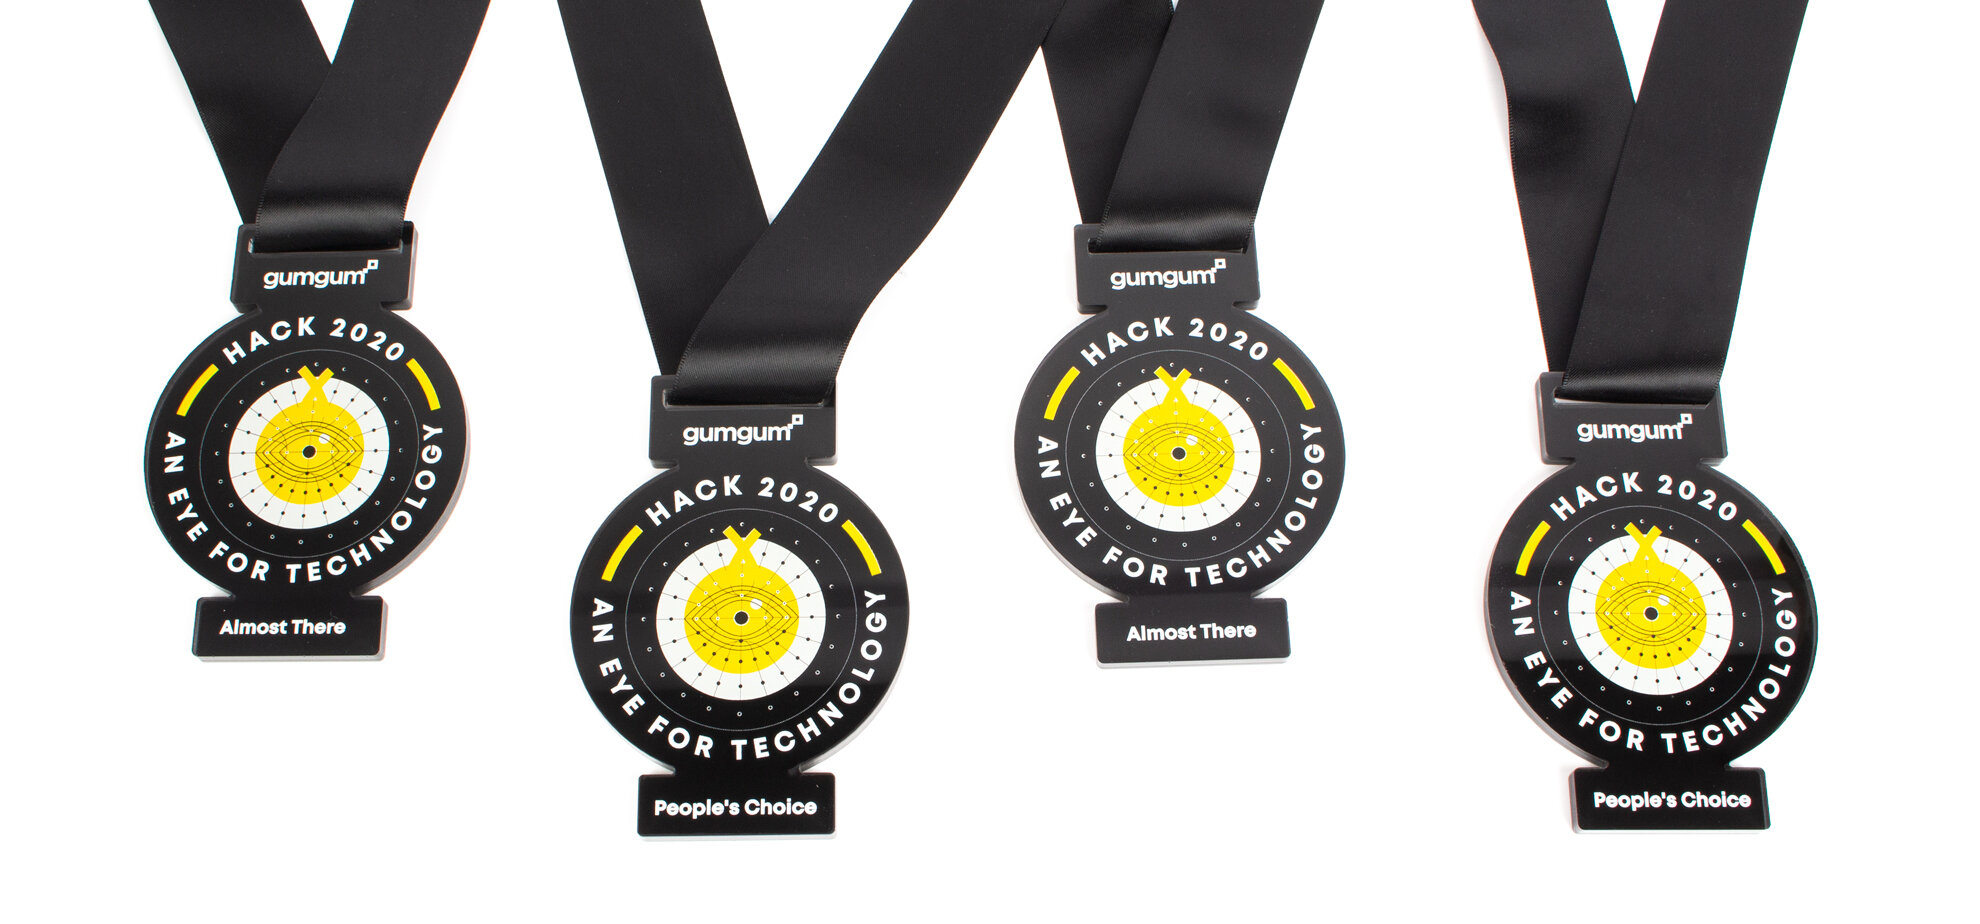 GumGum-Hackathon-2020-an-eye-for-technology-medals